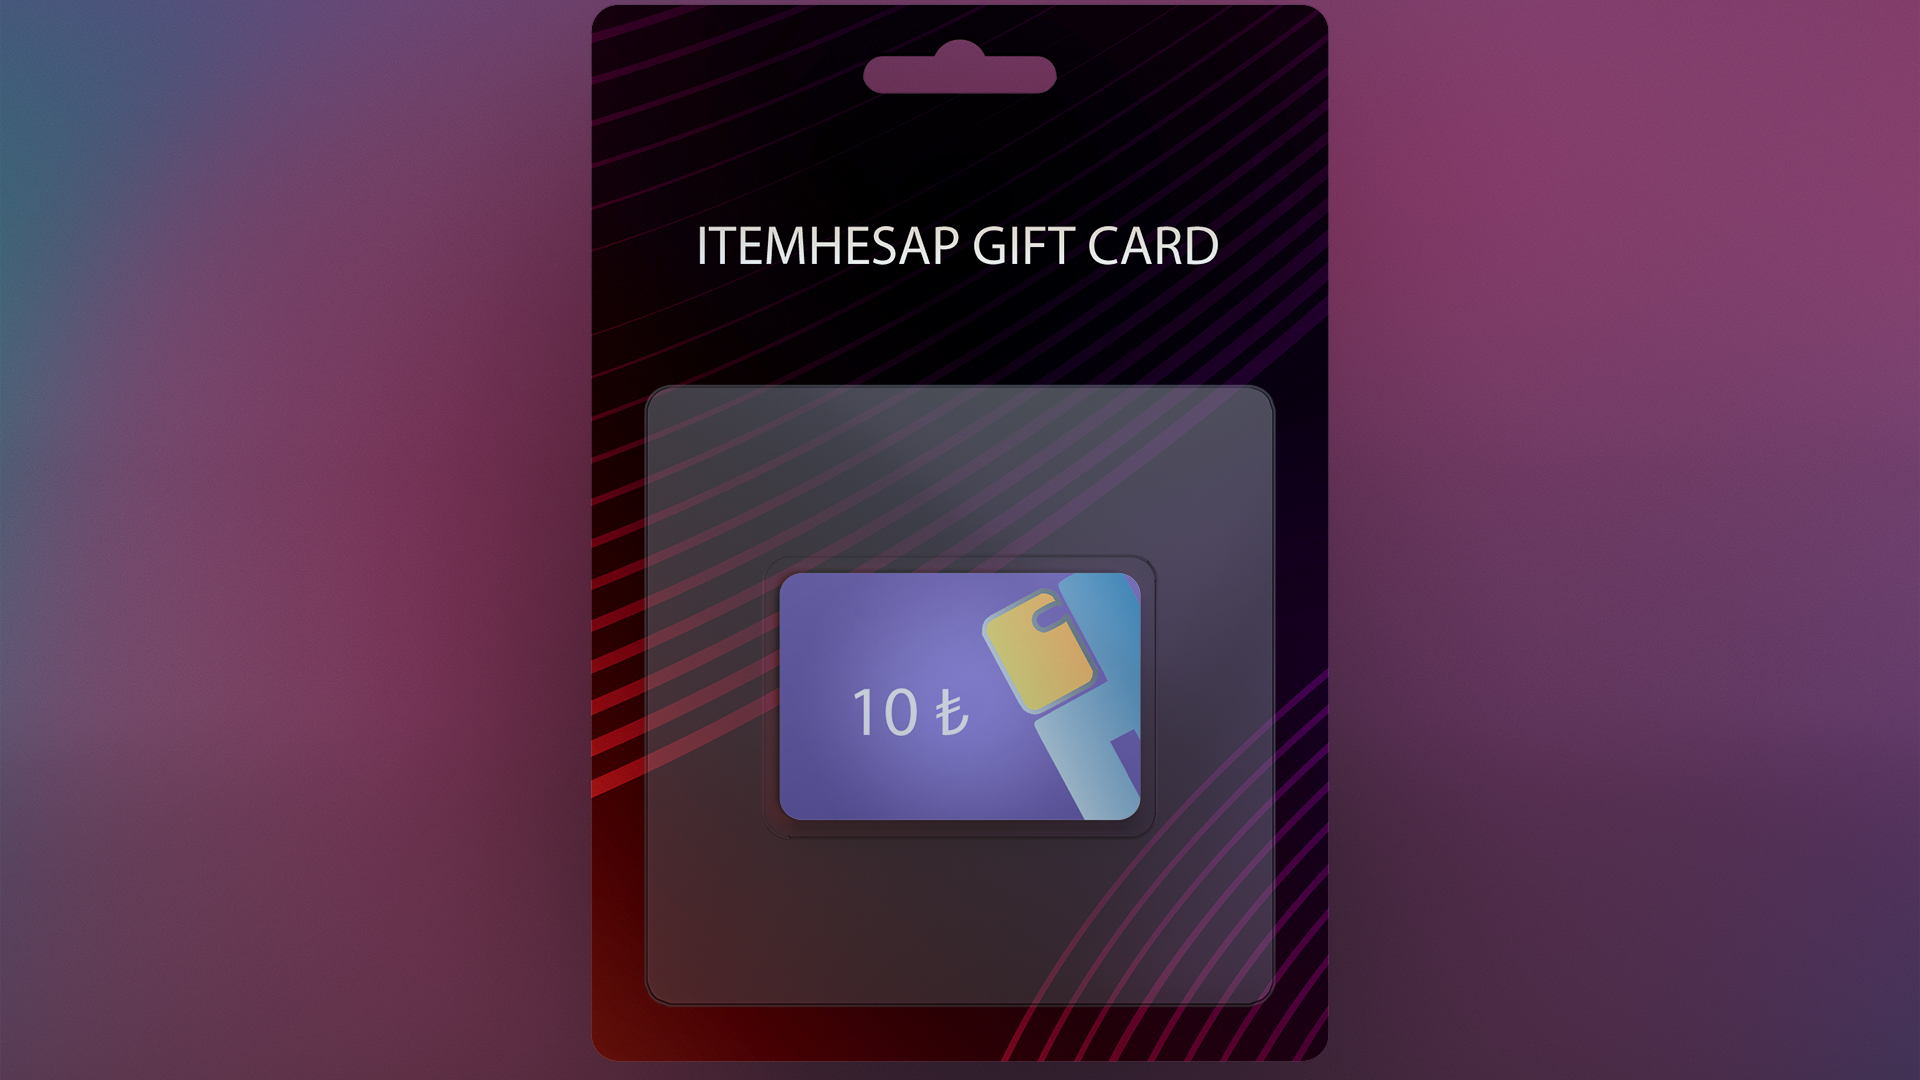 [$ 1.14] ItemHesap ₺10 Gift Card